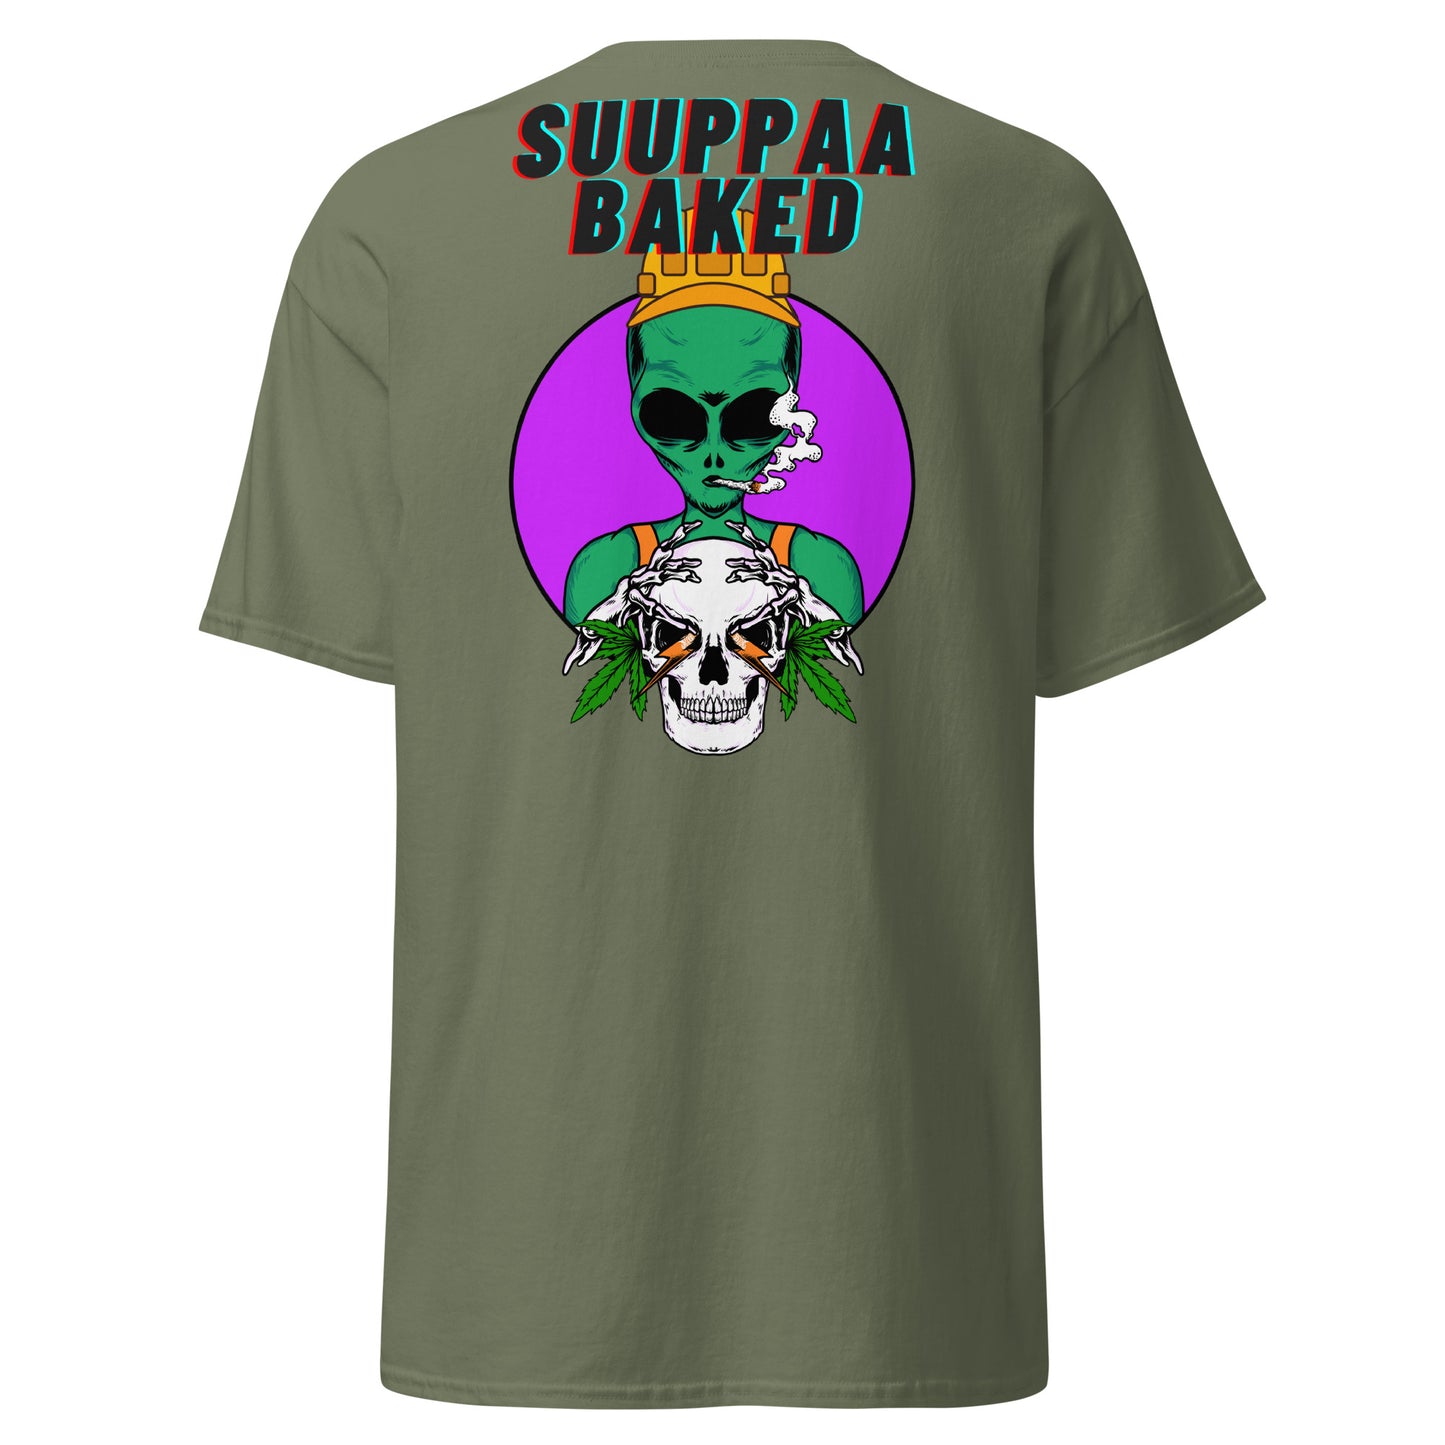 Suuppaa Baked T-shirt